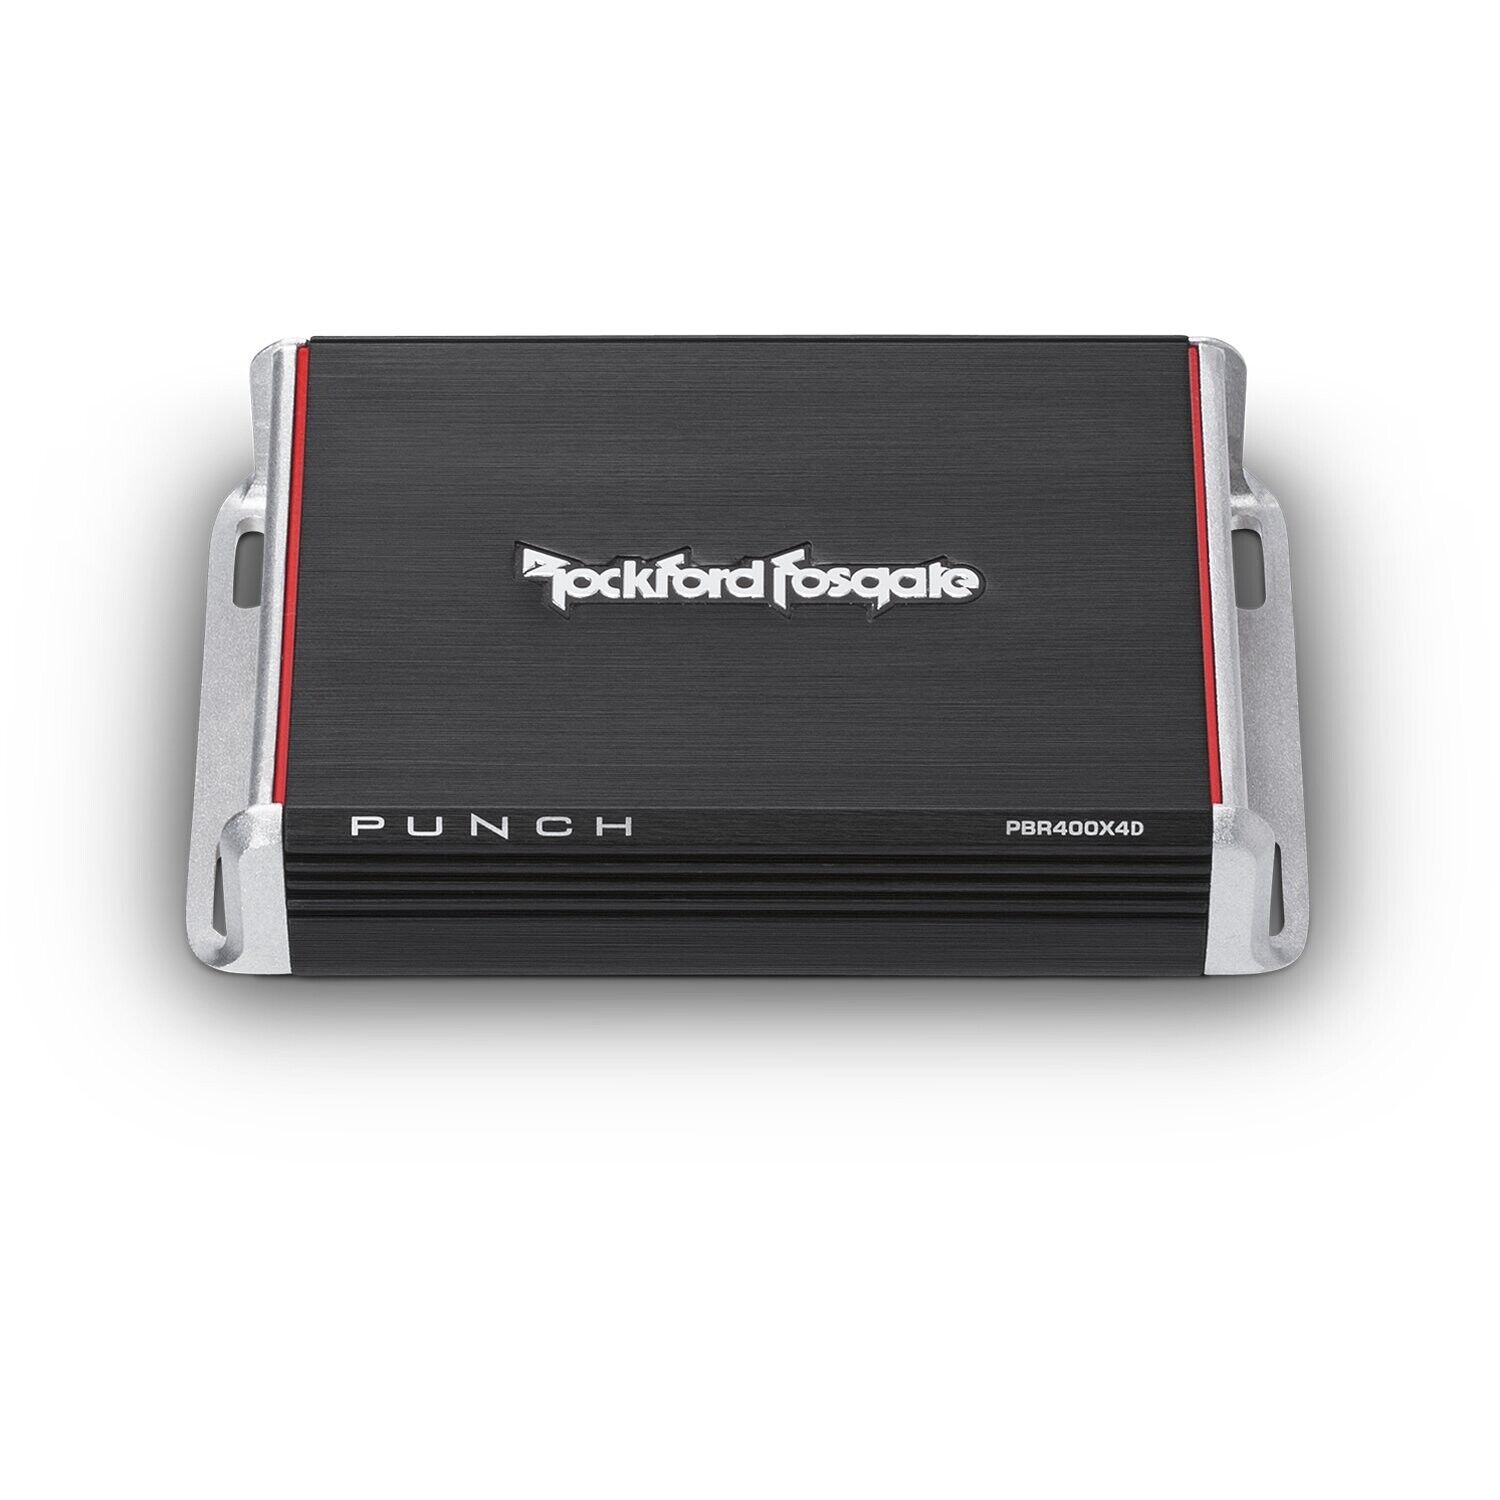 Rockford Fosgate Punch PBR400X4D Compact 4-Channel Motorcycle UTV Amplifier